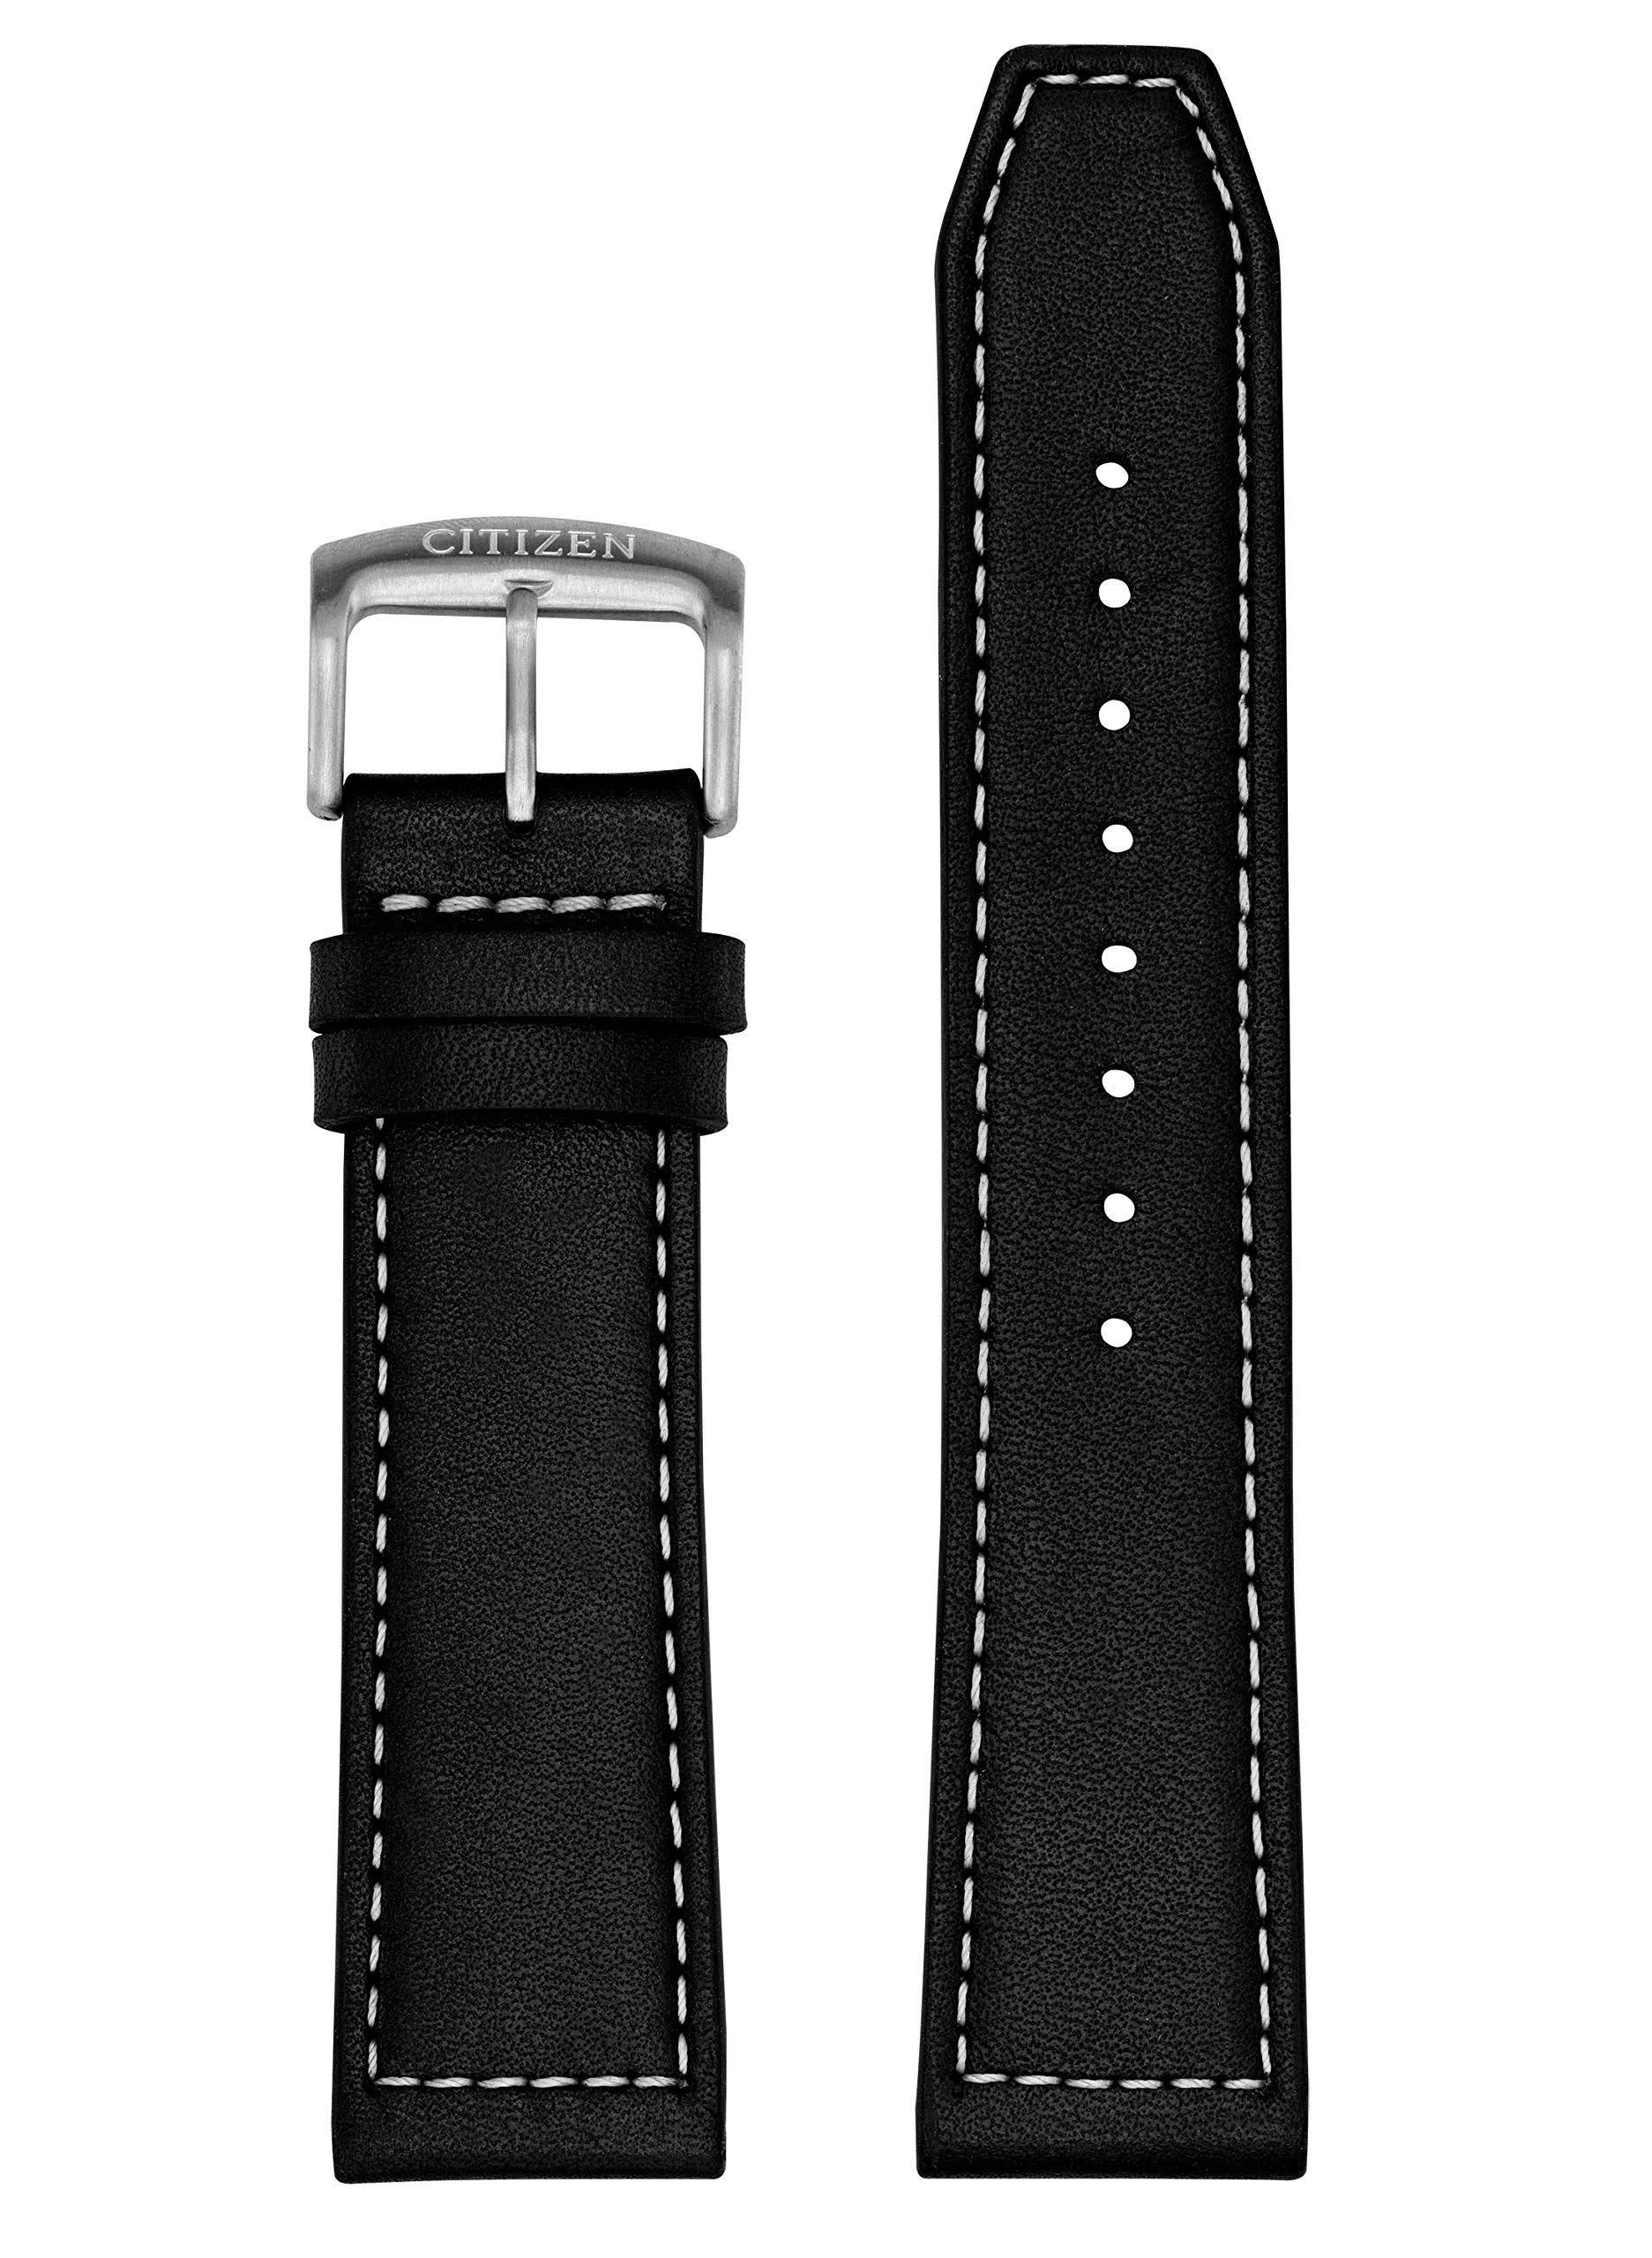 Black Leather Citizen CZ Smart Watch Band | Image